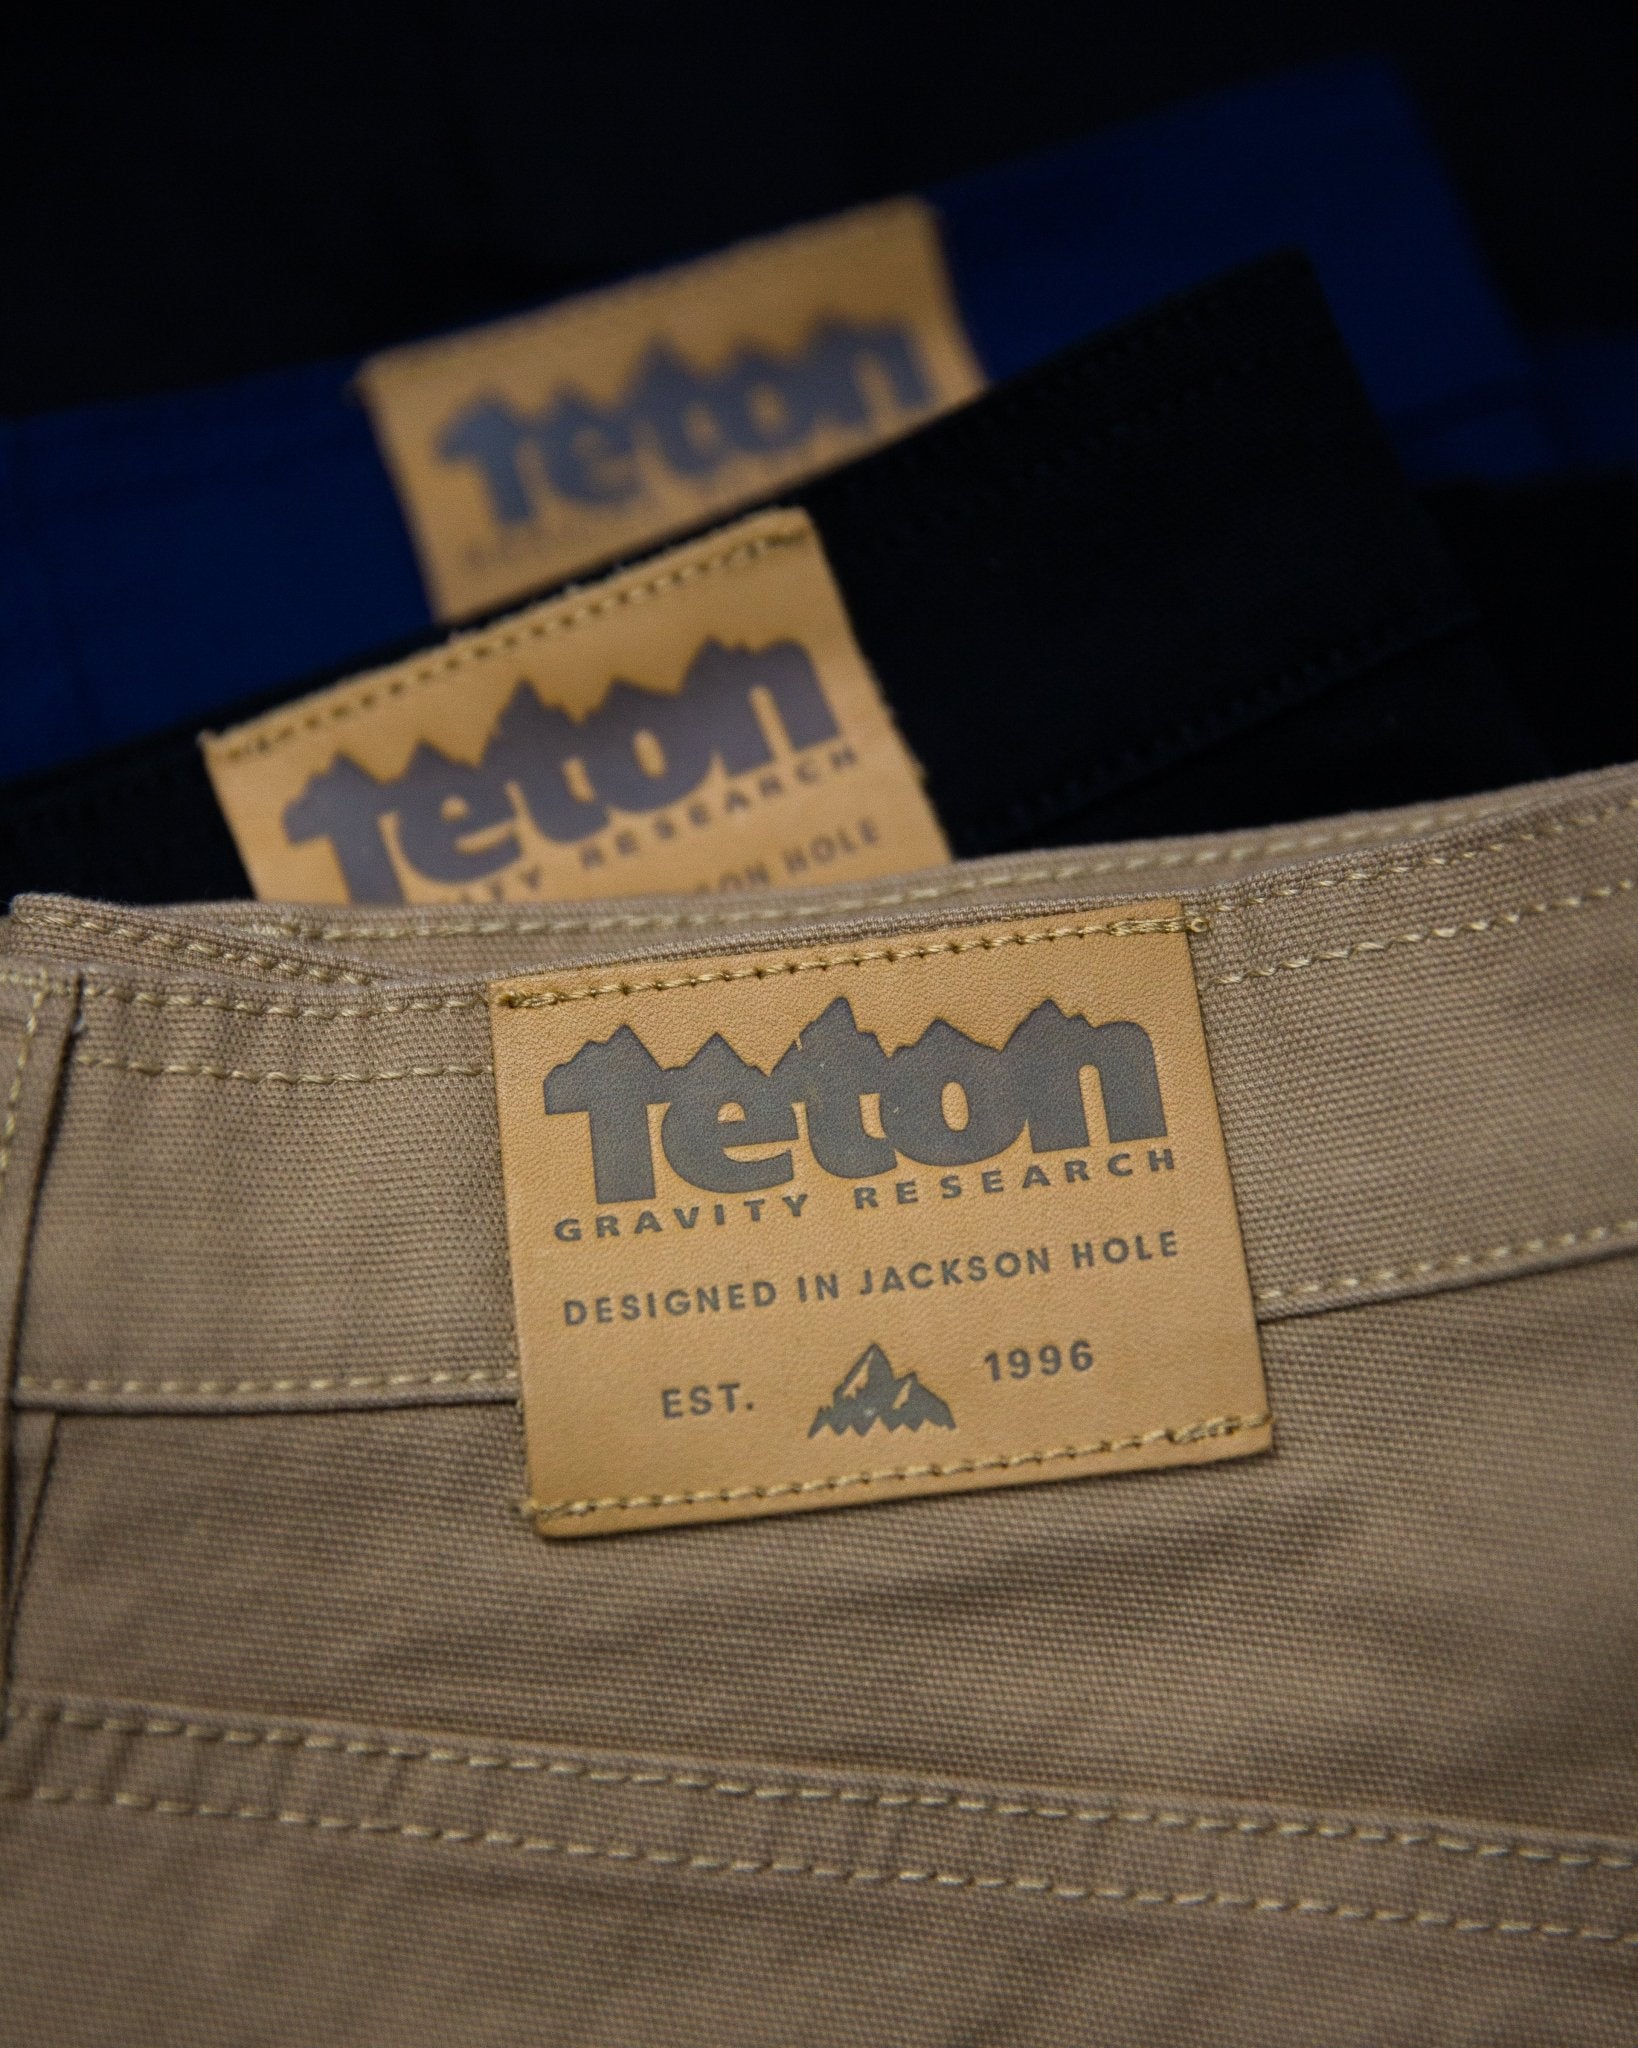 Ketchikan 5 Pocket Work Pants - Slim Fit - Teton Gravity Research